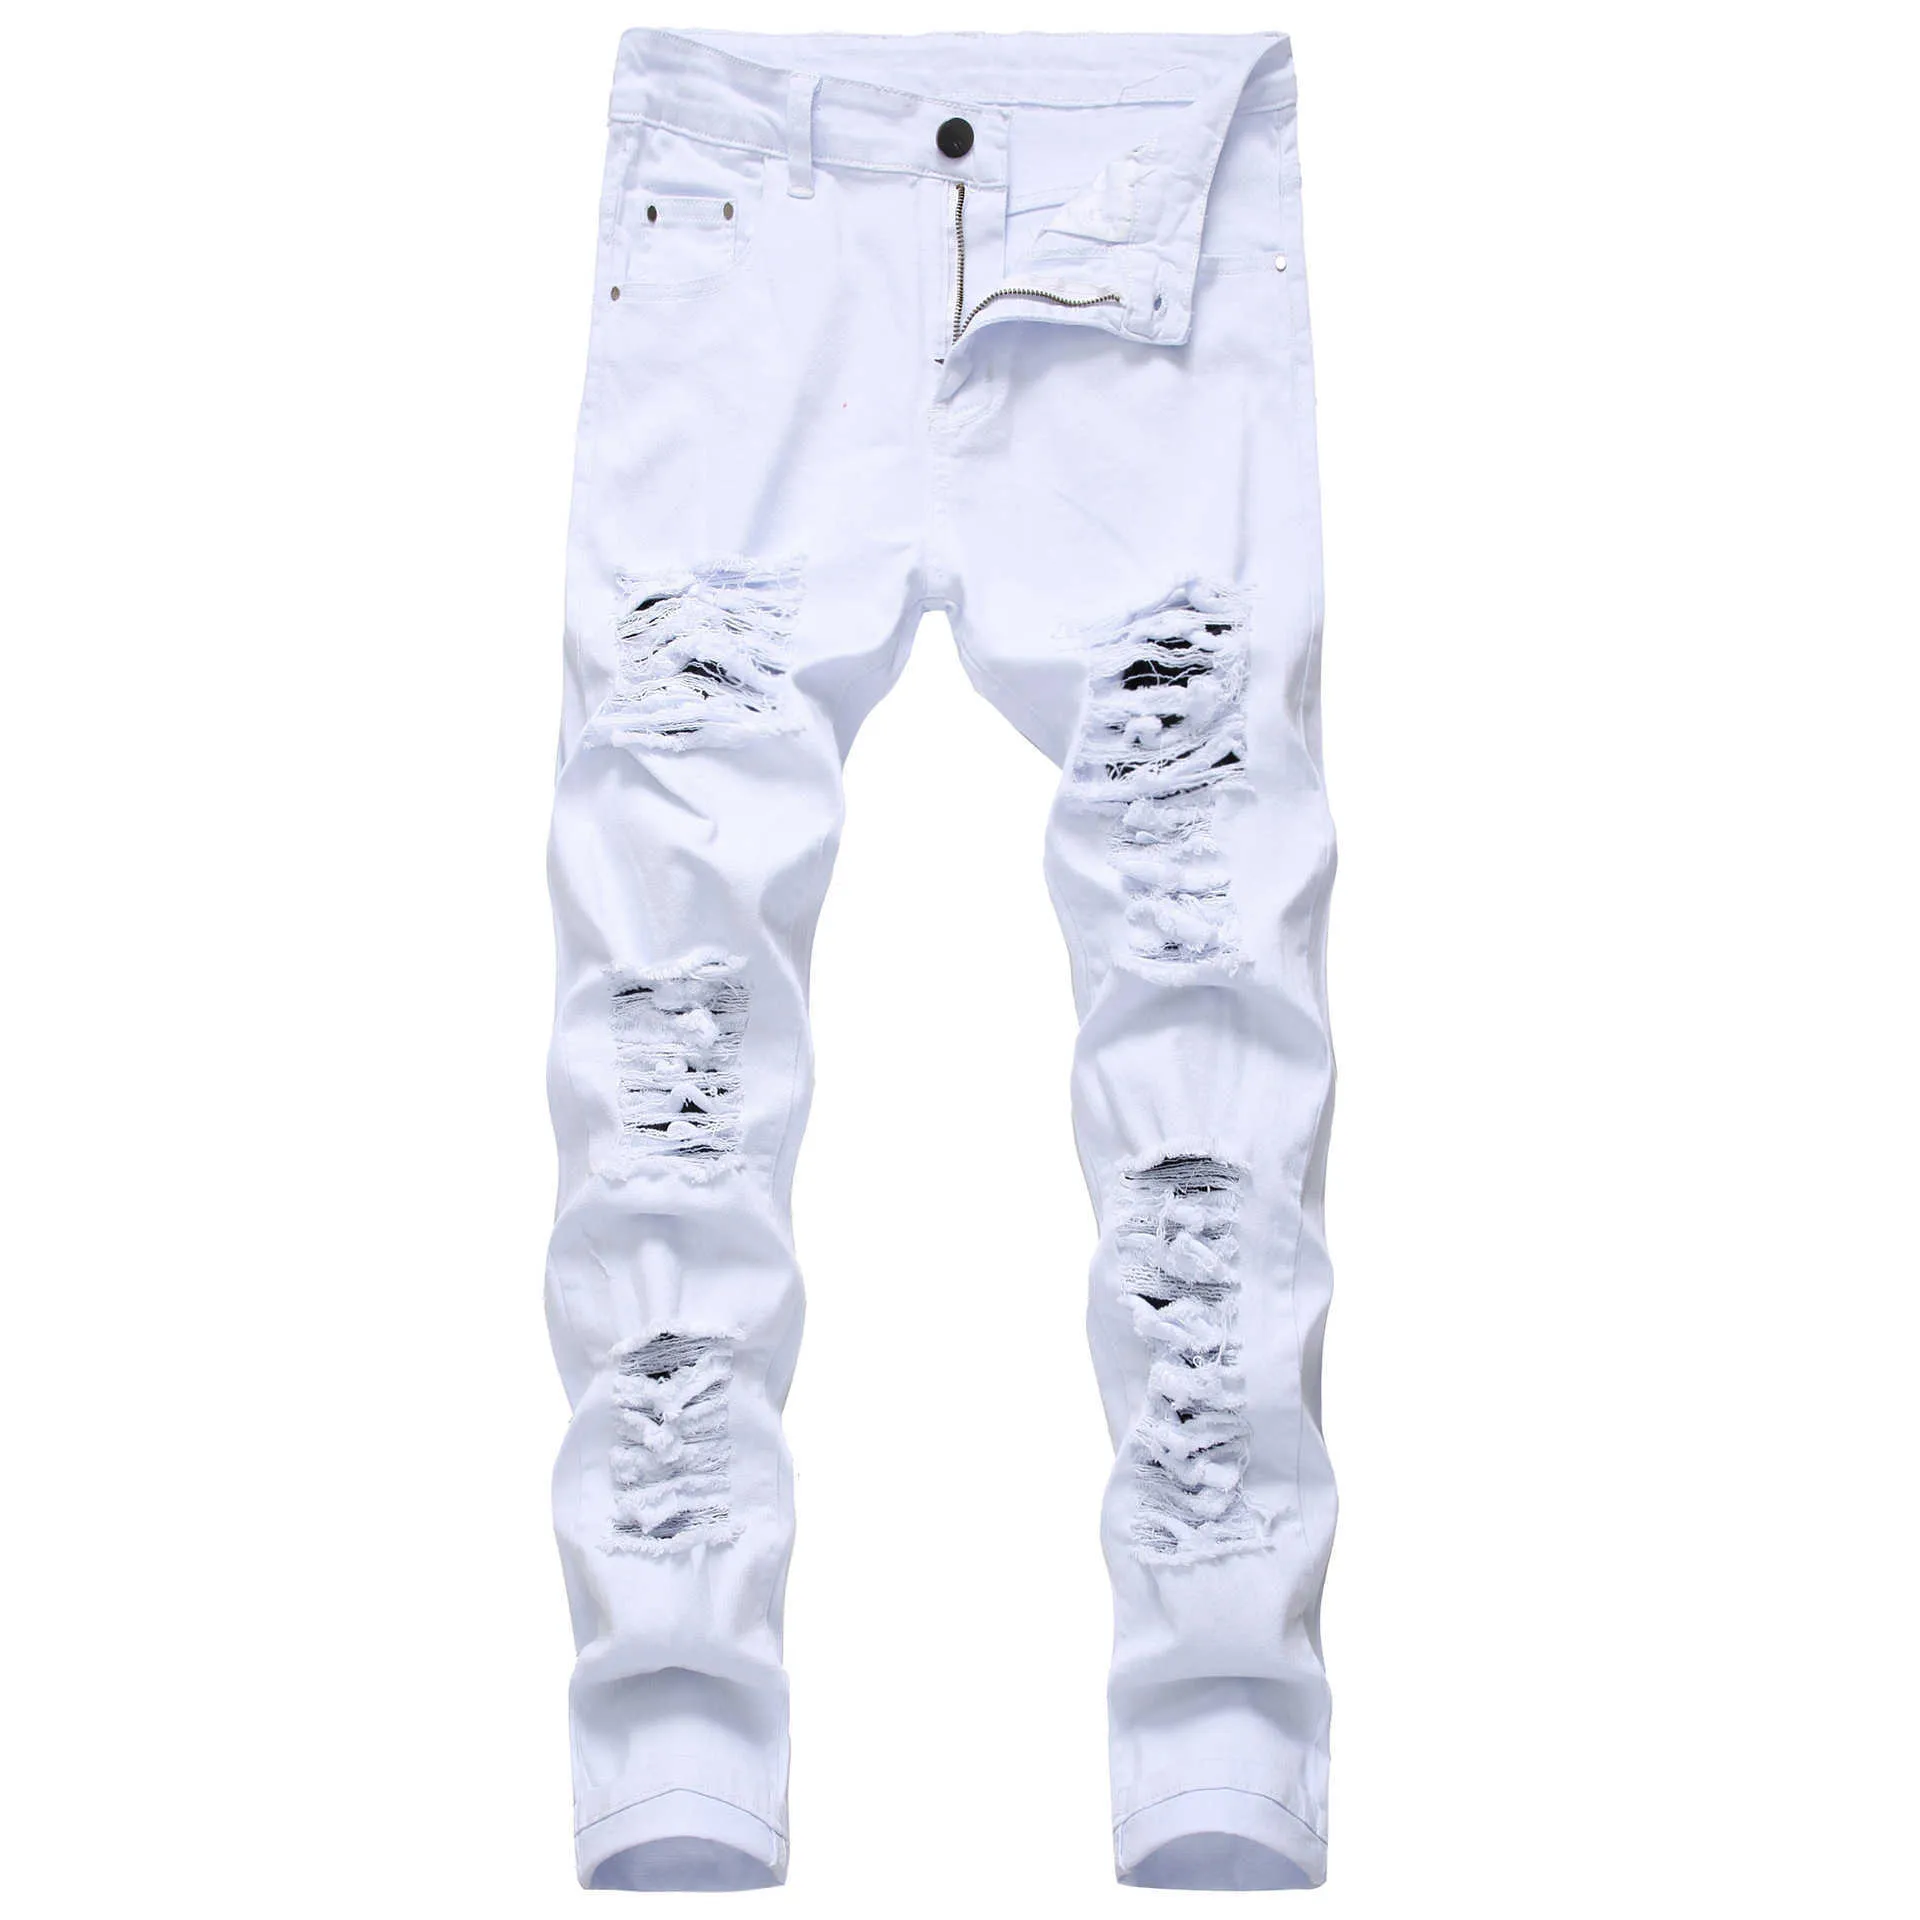 Arrival Men's Cotton Ripped Hole Jeans Casual Slim Skinny White Jeans men Trousers Fashion Stretch hip hop Denim Pants Male 210622